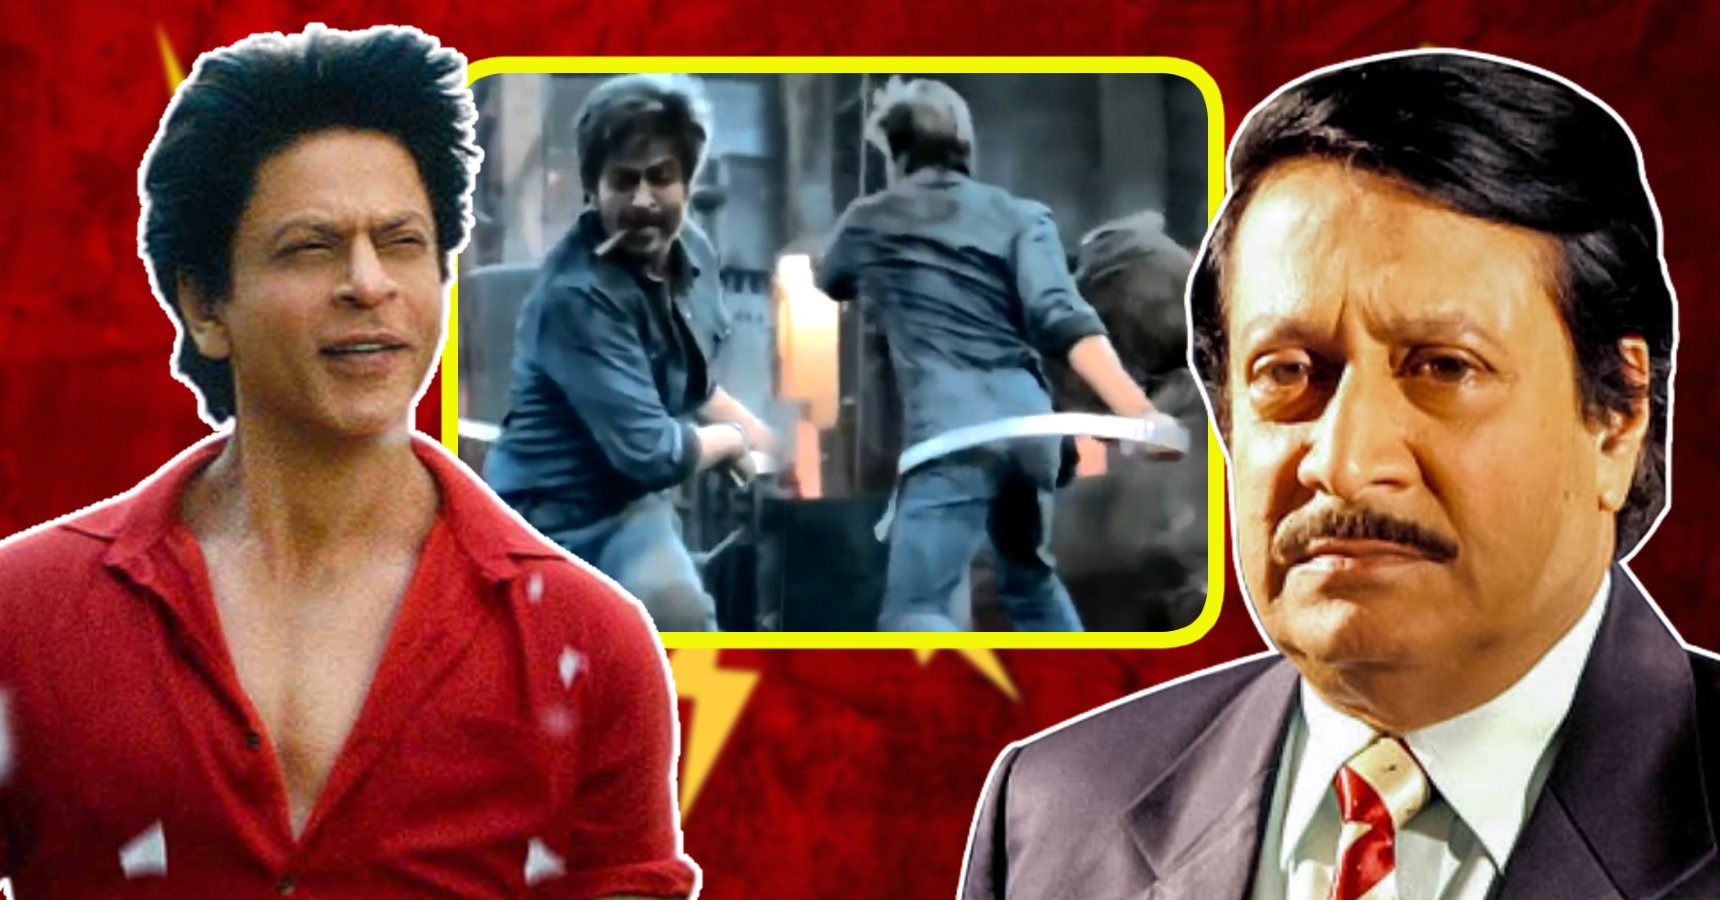 Shah Rukh Khan Jawan fight Scene inspired by Ranjit Mallick meme viral on internet